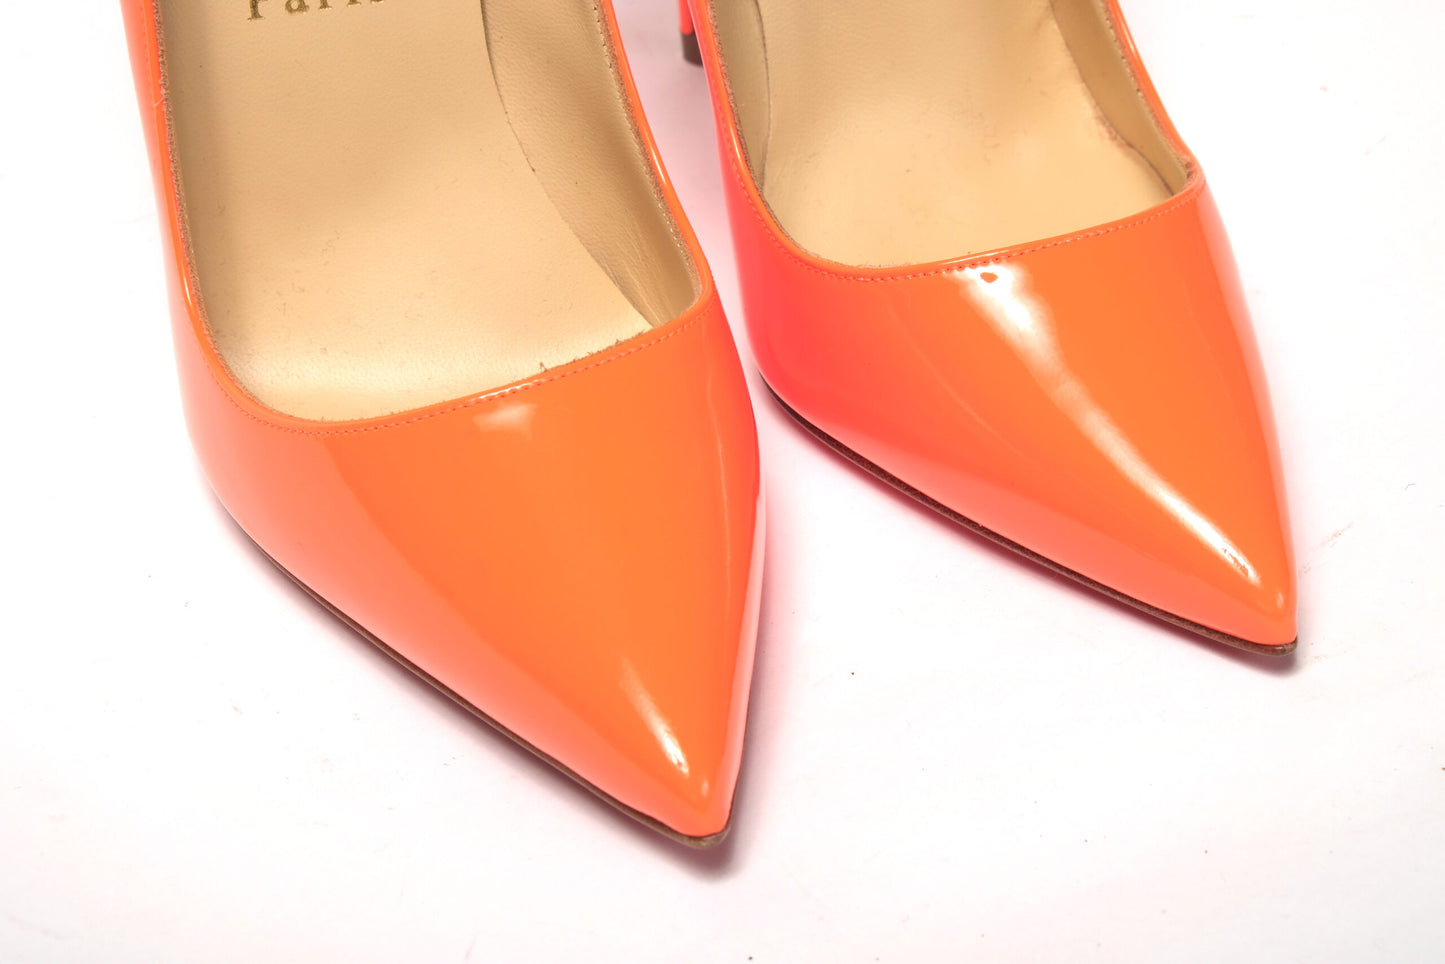 Neon Orange So Kate Patent High Heel